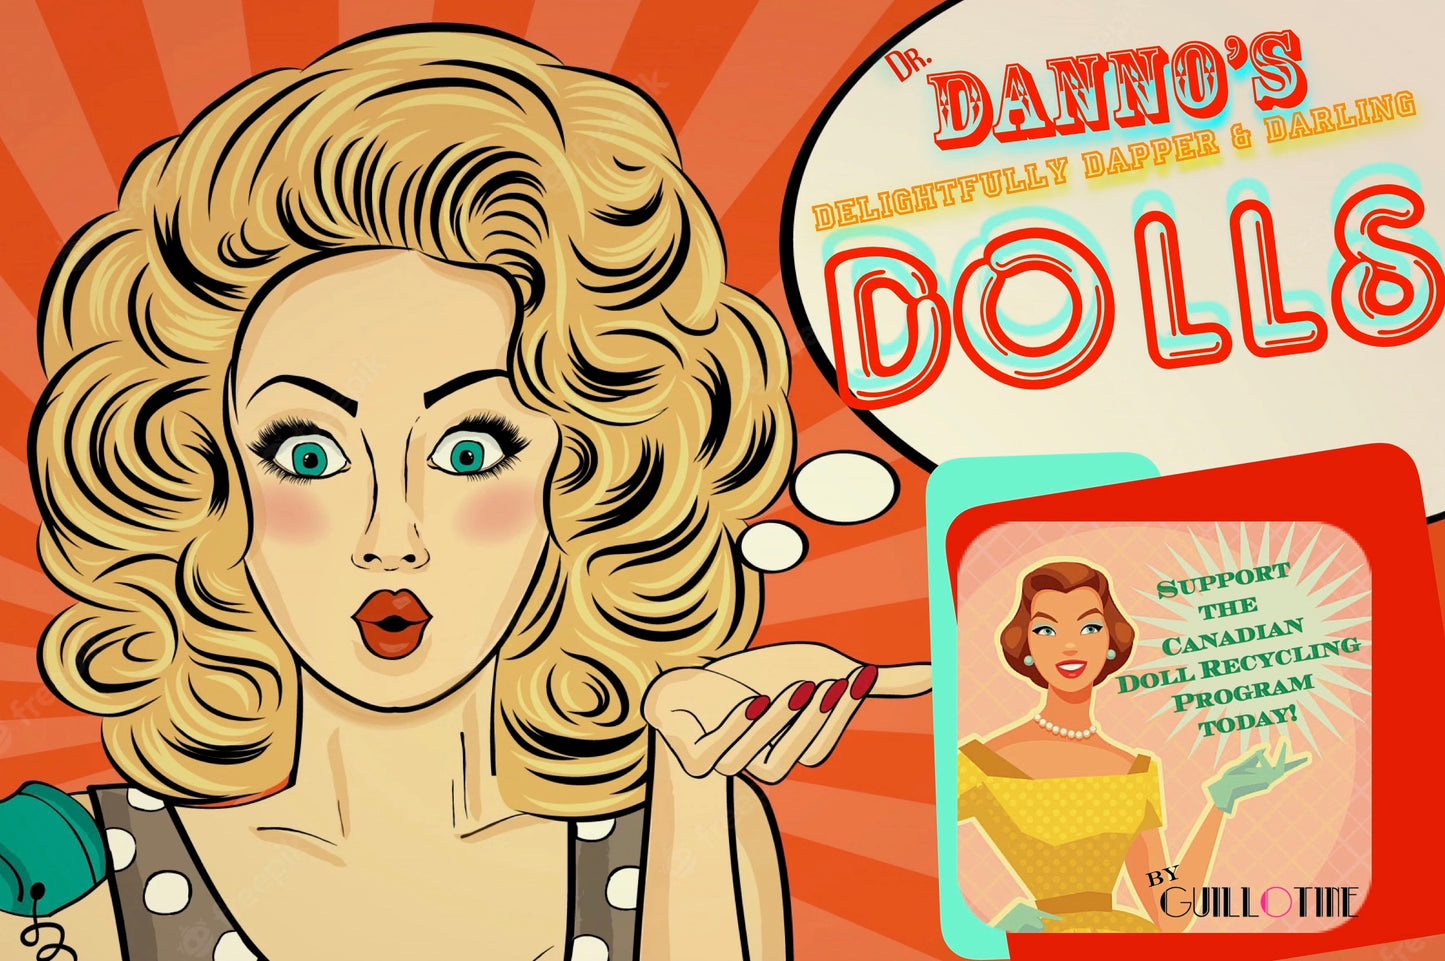 Dr. Danno's Delightfully Dapper Darling Dolls